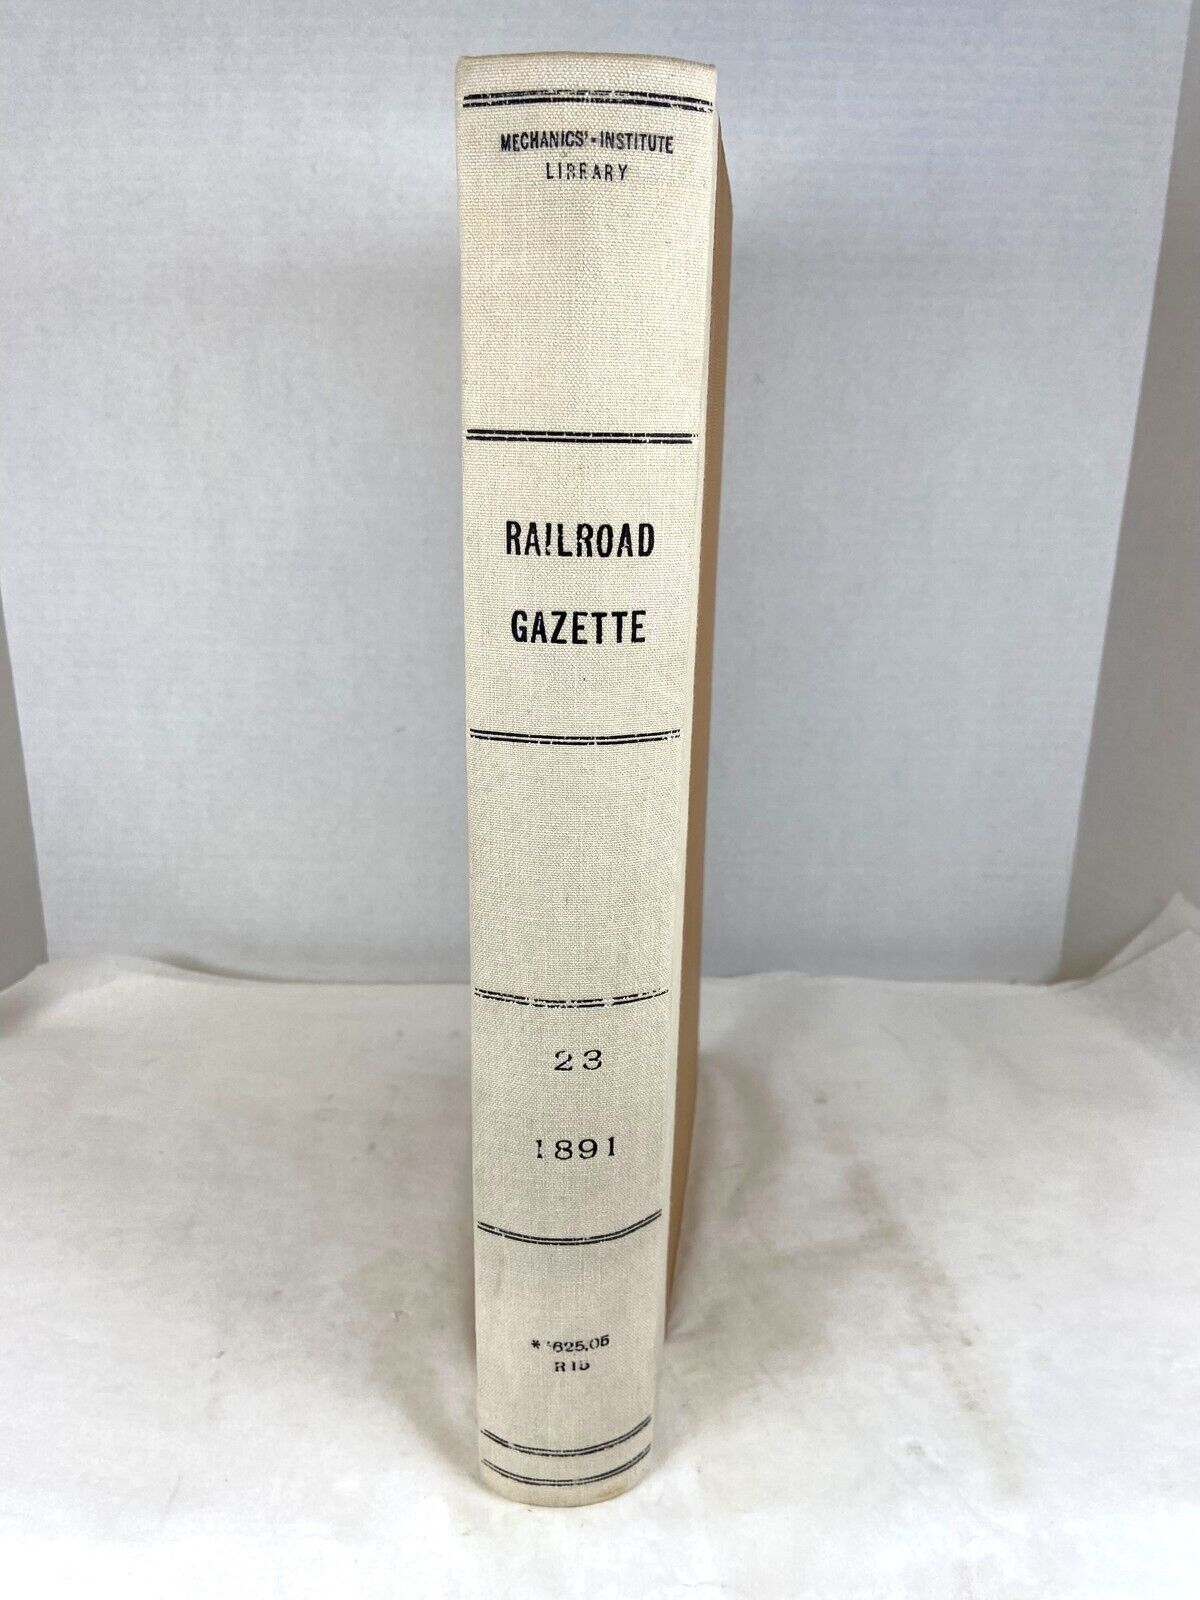 Rare 1891 Volume 23 RAILROAD GAZETTE - Jan 1, 1891 to Dec 31, 1891 - OP HB RB